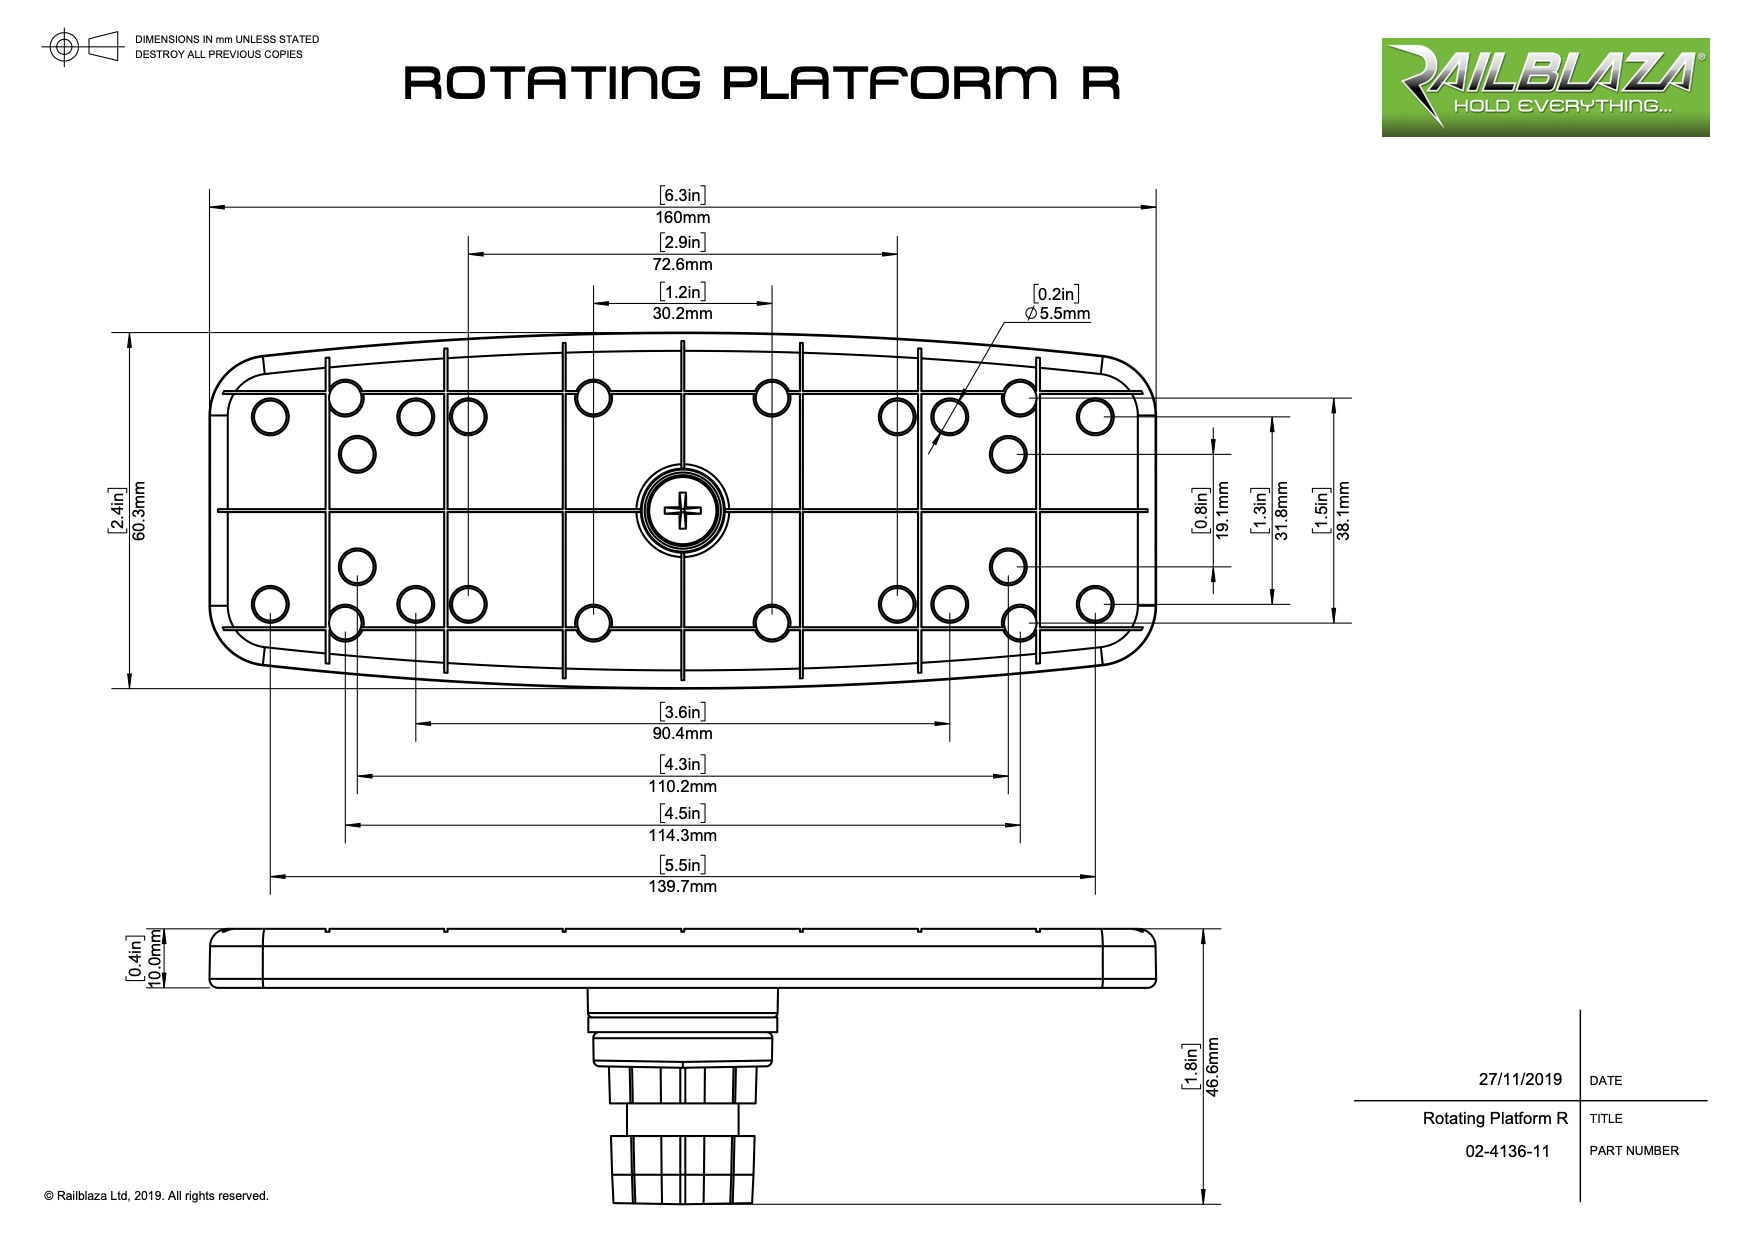 Rotating-Platform-R-RAILBLAZA-Rotating-Platform-R-Dimensions-2253_153838.jpg